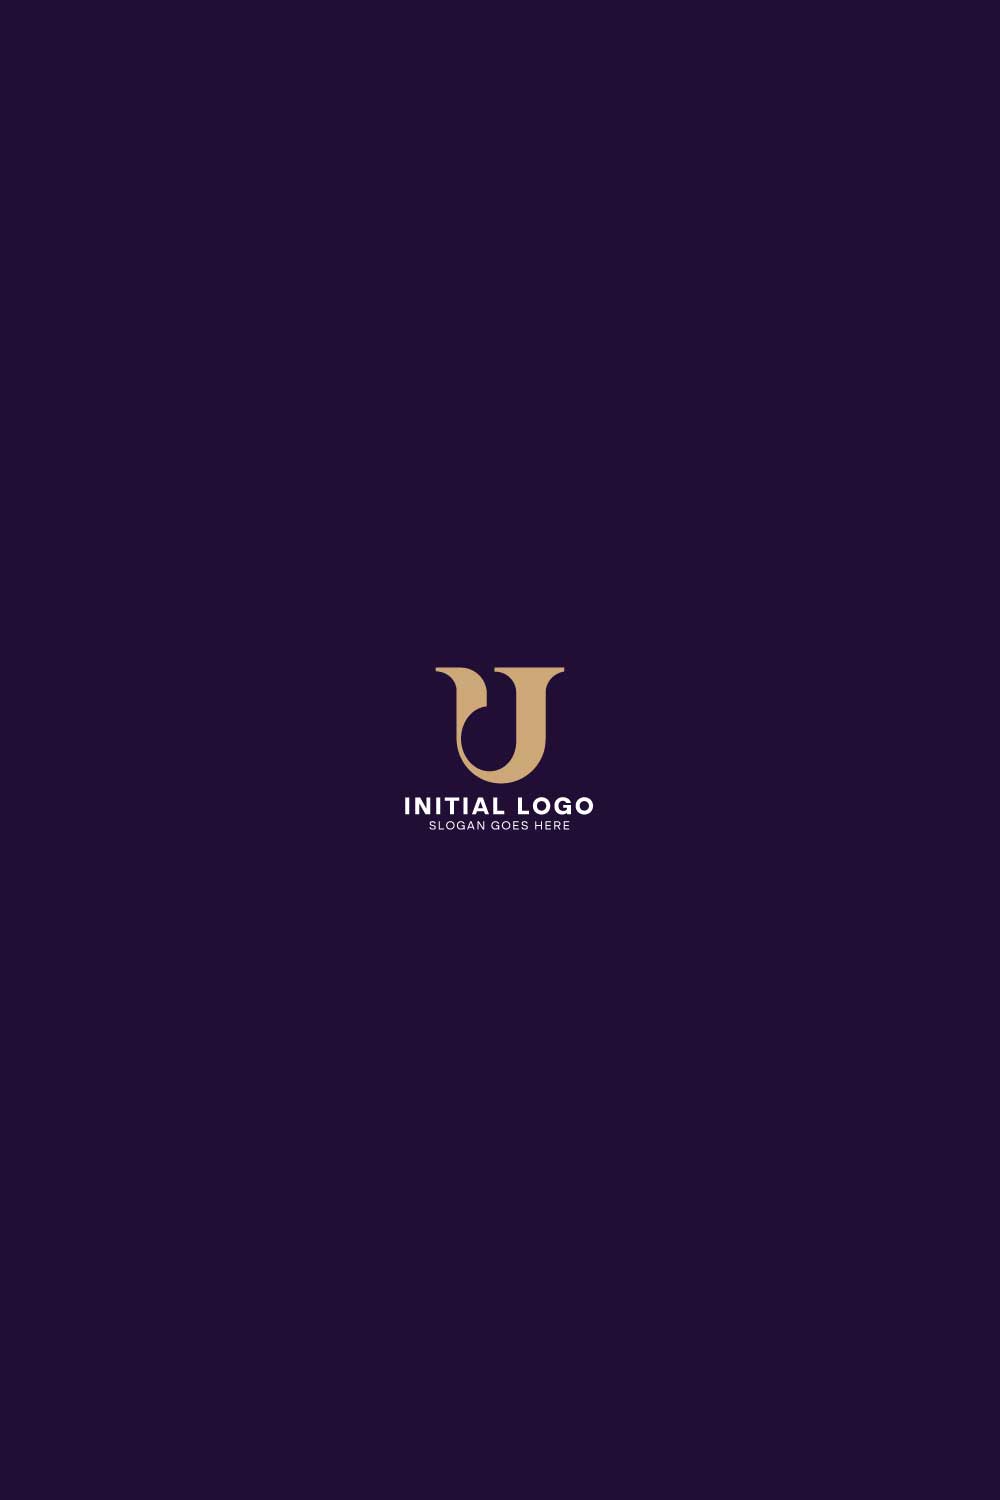 Creative UJ JU Letter Logo design pinterest preview image.